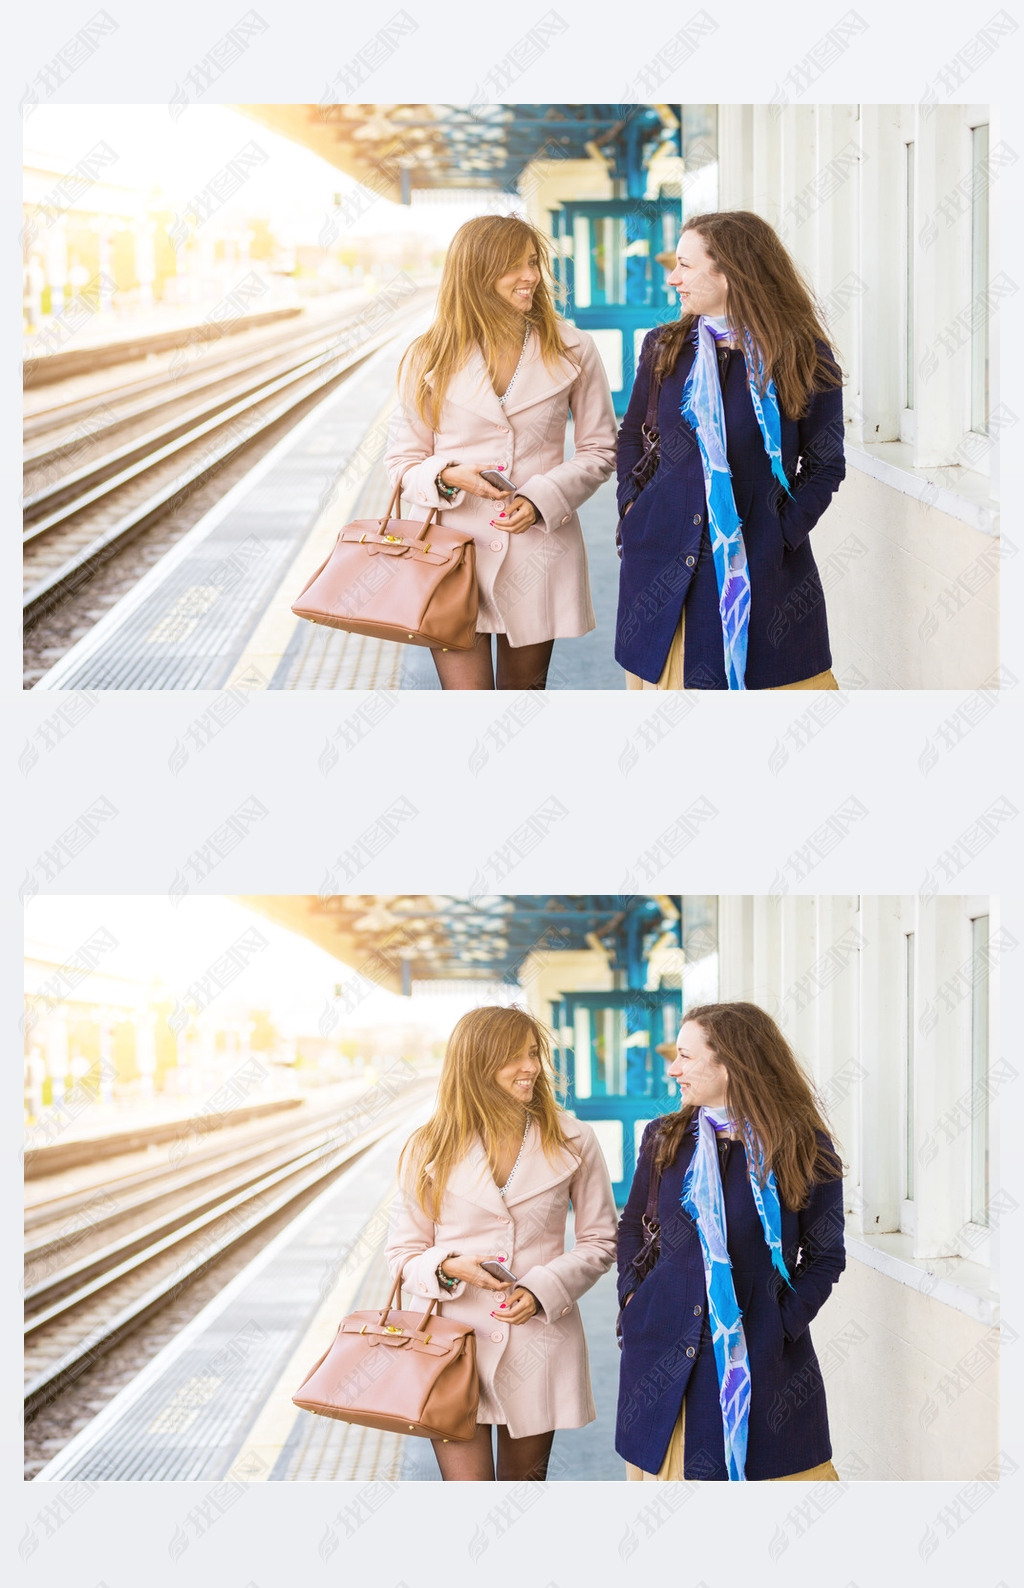 Two beautiful women walking along platform at train station